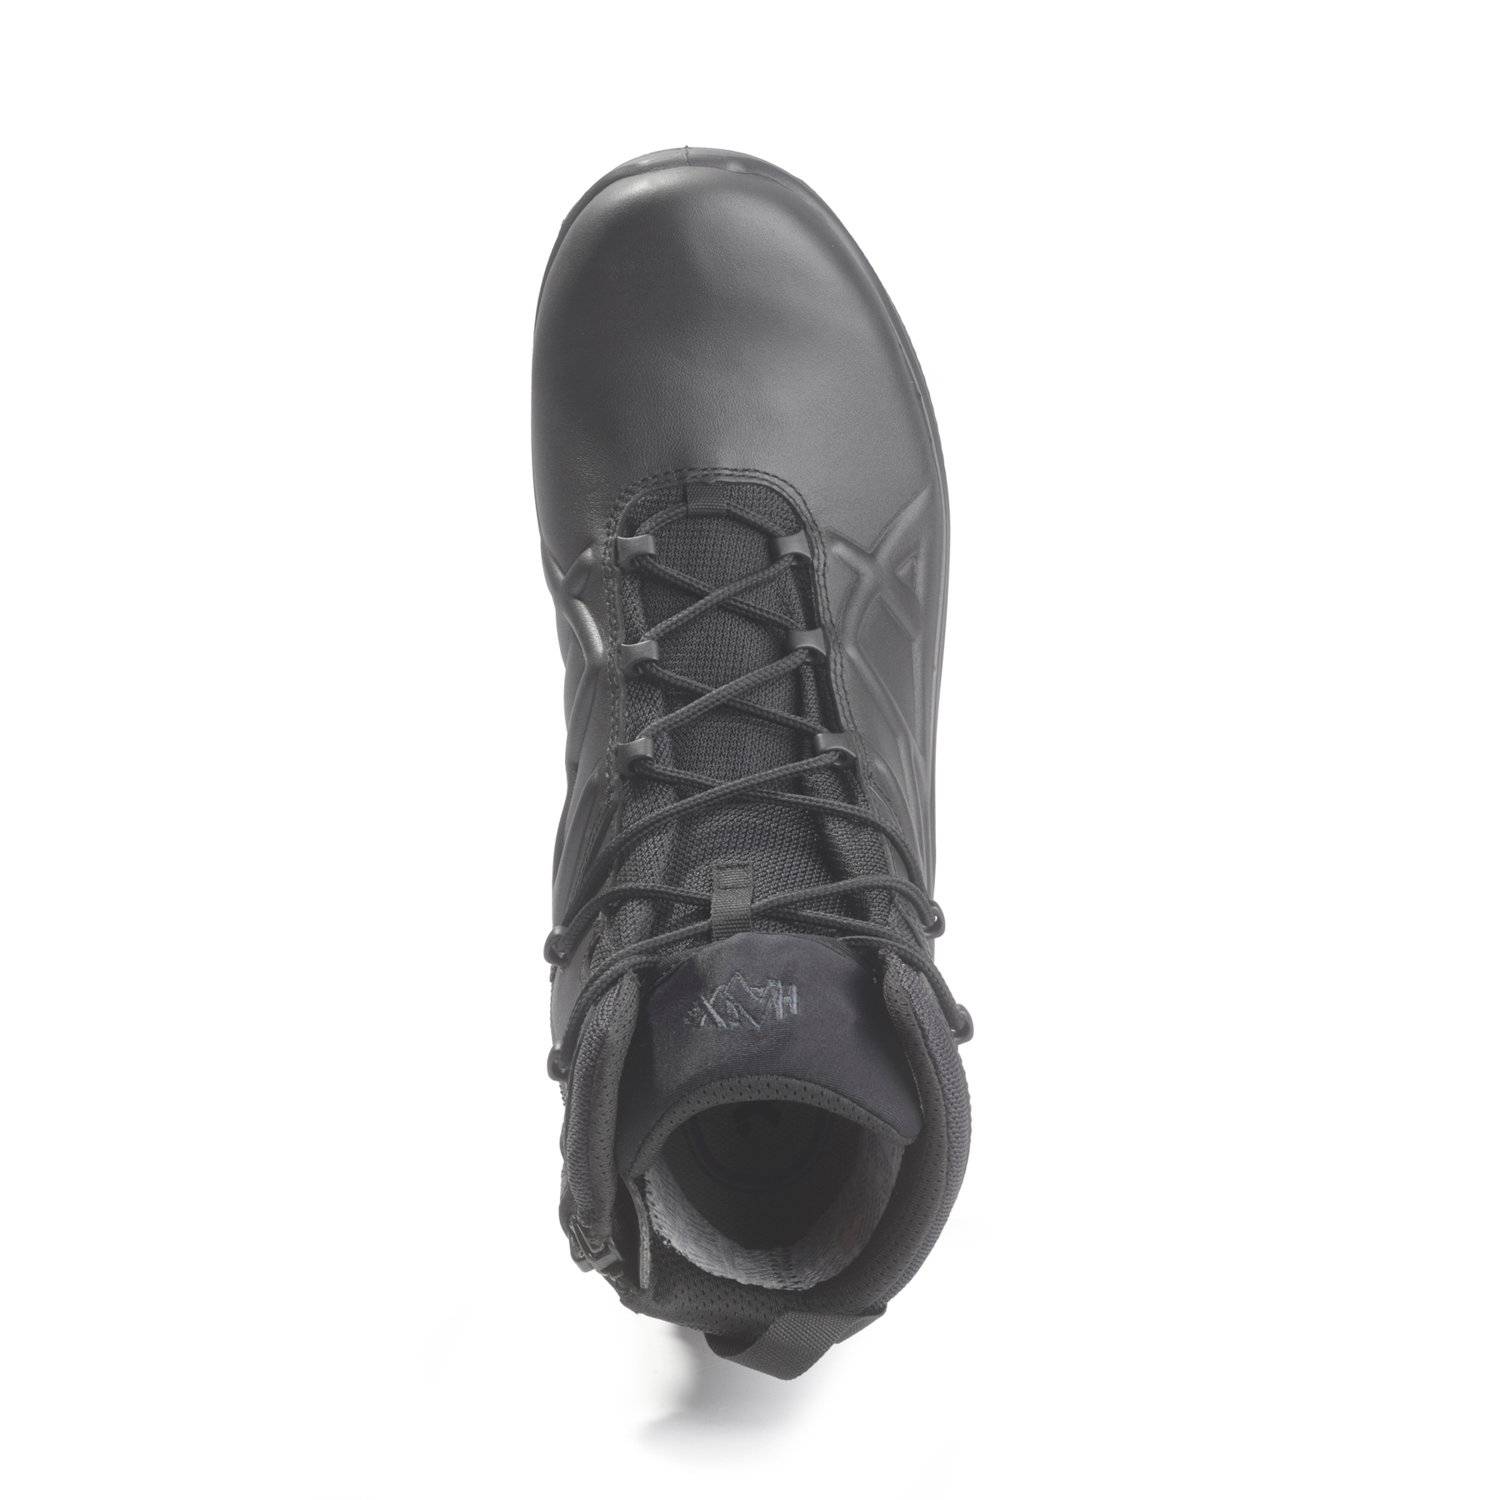 Haix Black Eagle Tactical 2.0 Mid Side-Zip Boots